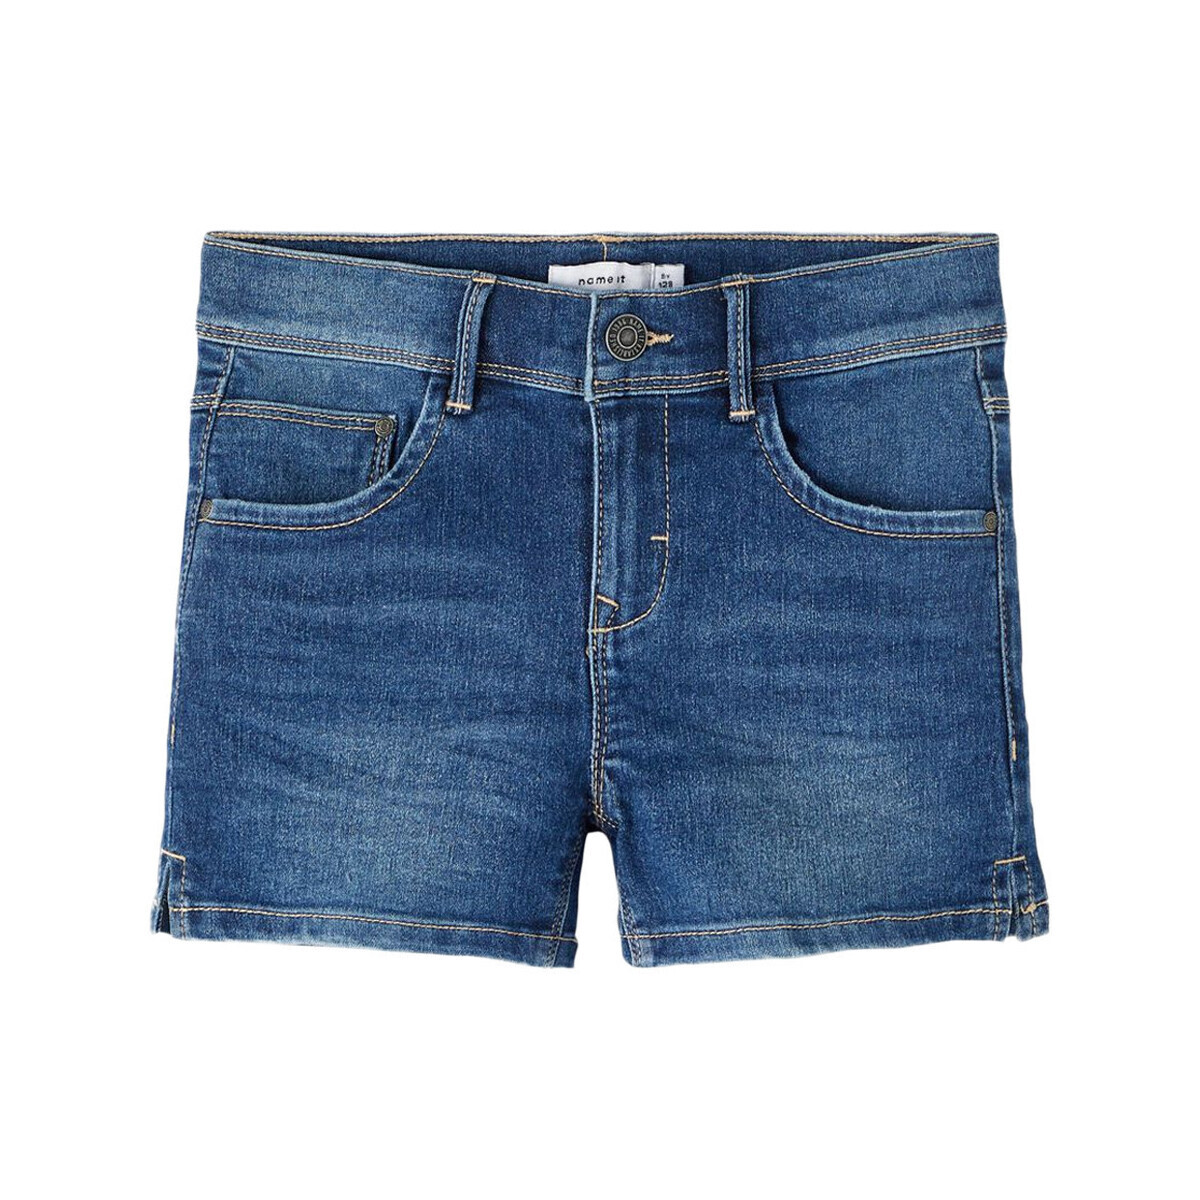 Vêtements Fille Shorts / Bermudas Name it 13213290 Bleu